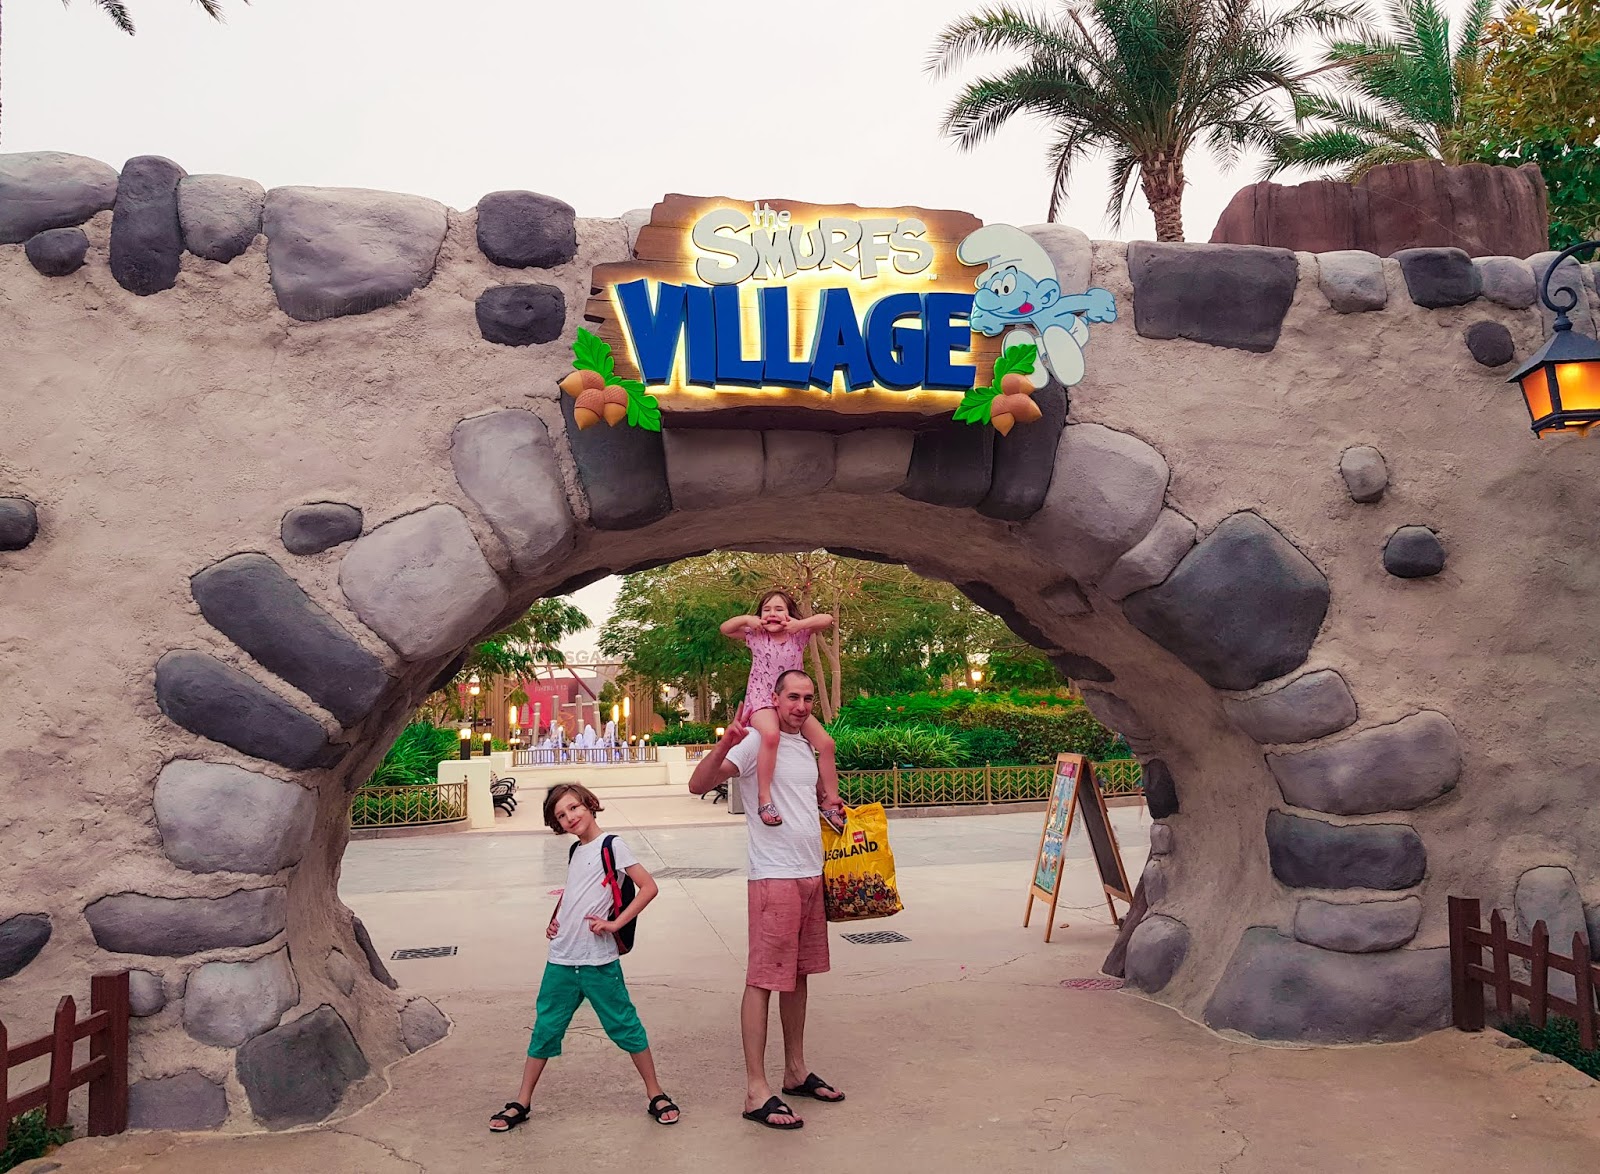 Dubai parks and resorts; #visitdubai #legoland #motiongate #dubaiparks #adventuretime #dubaj #smerfy #legodubaj #lego #legolanddubaj